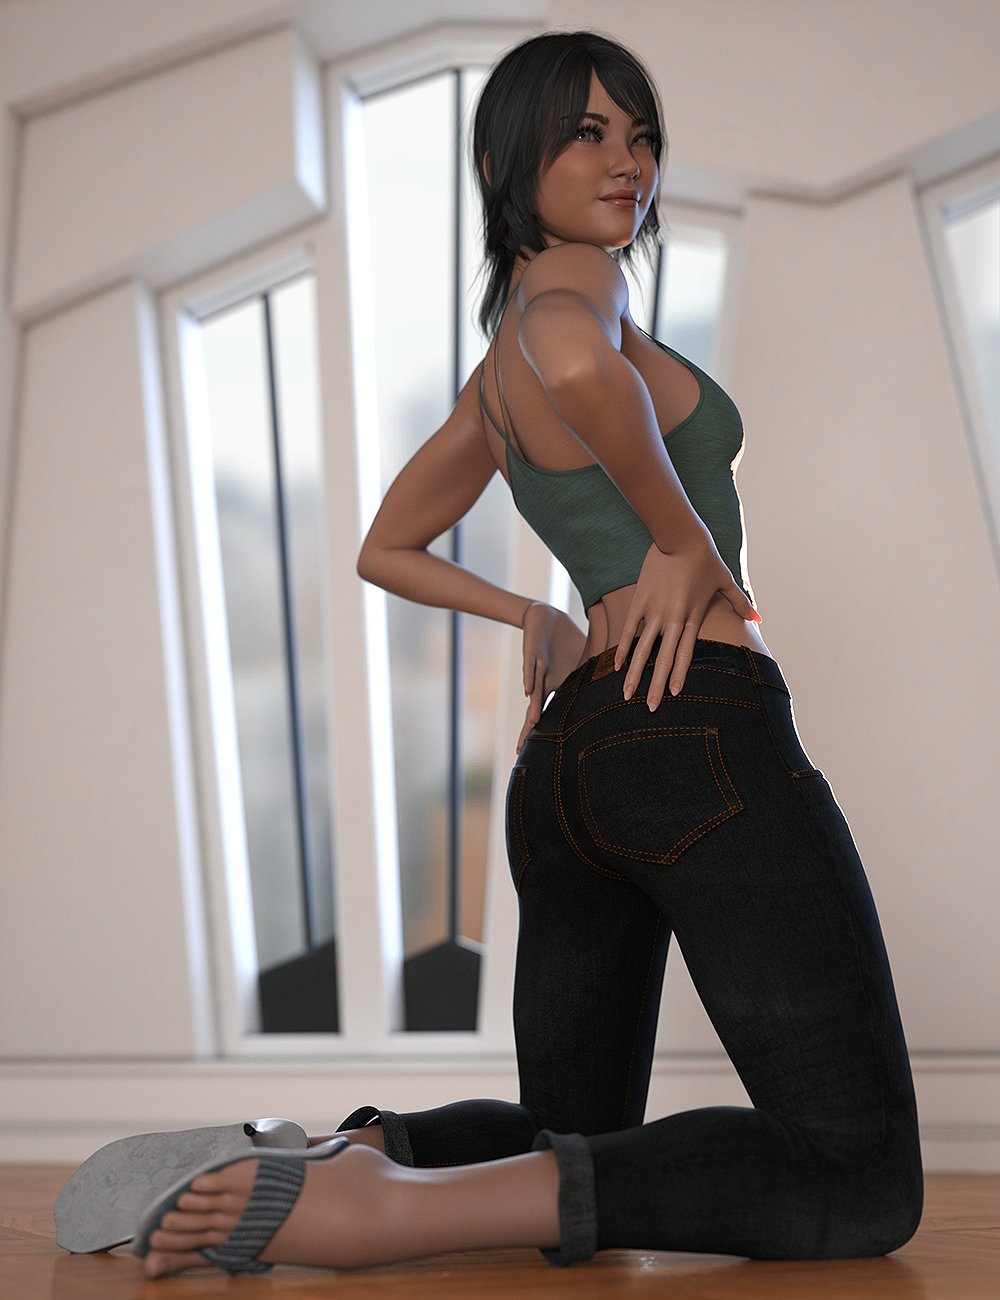 Lowkey Floor Poses Utility for Genesis 8.1 Females by: Val3dartbiuzpharb, 3D Models by Daz 3D